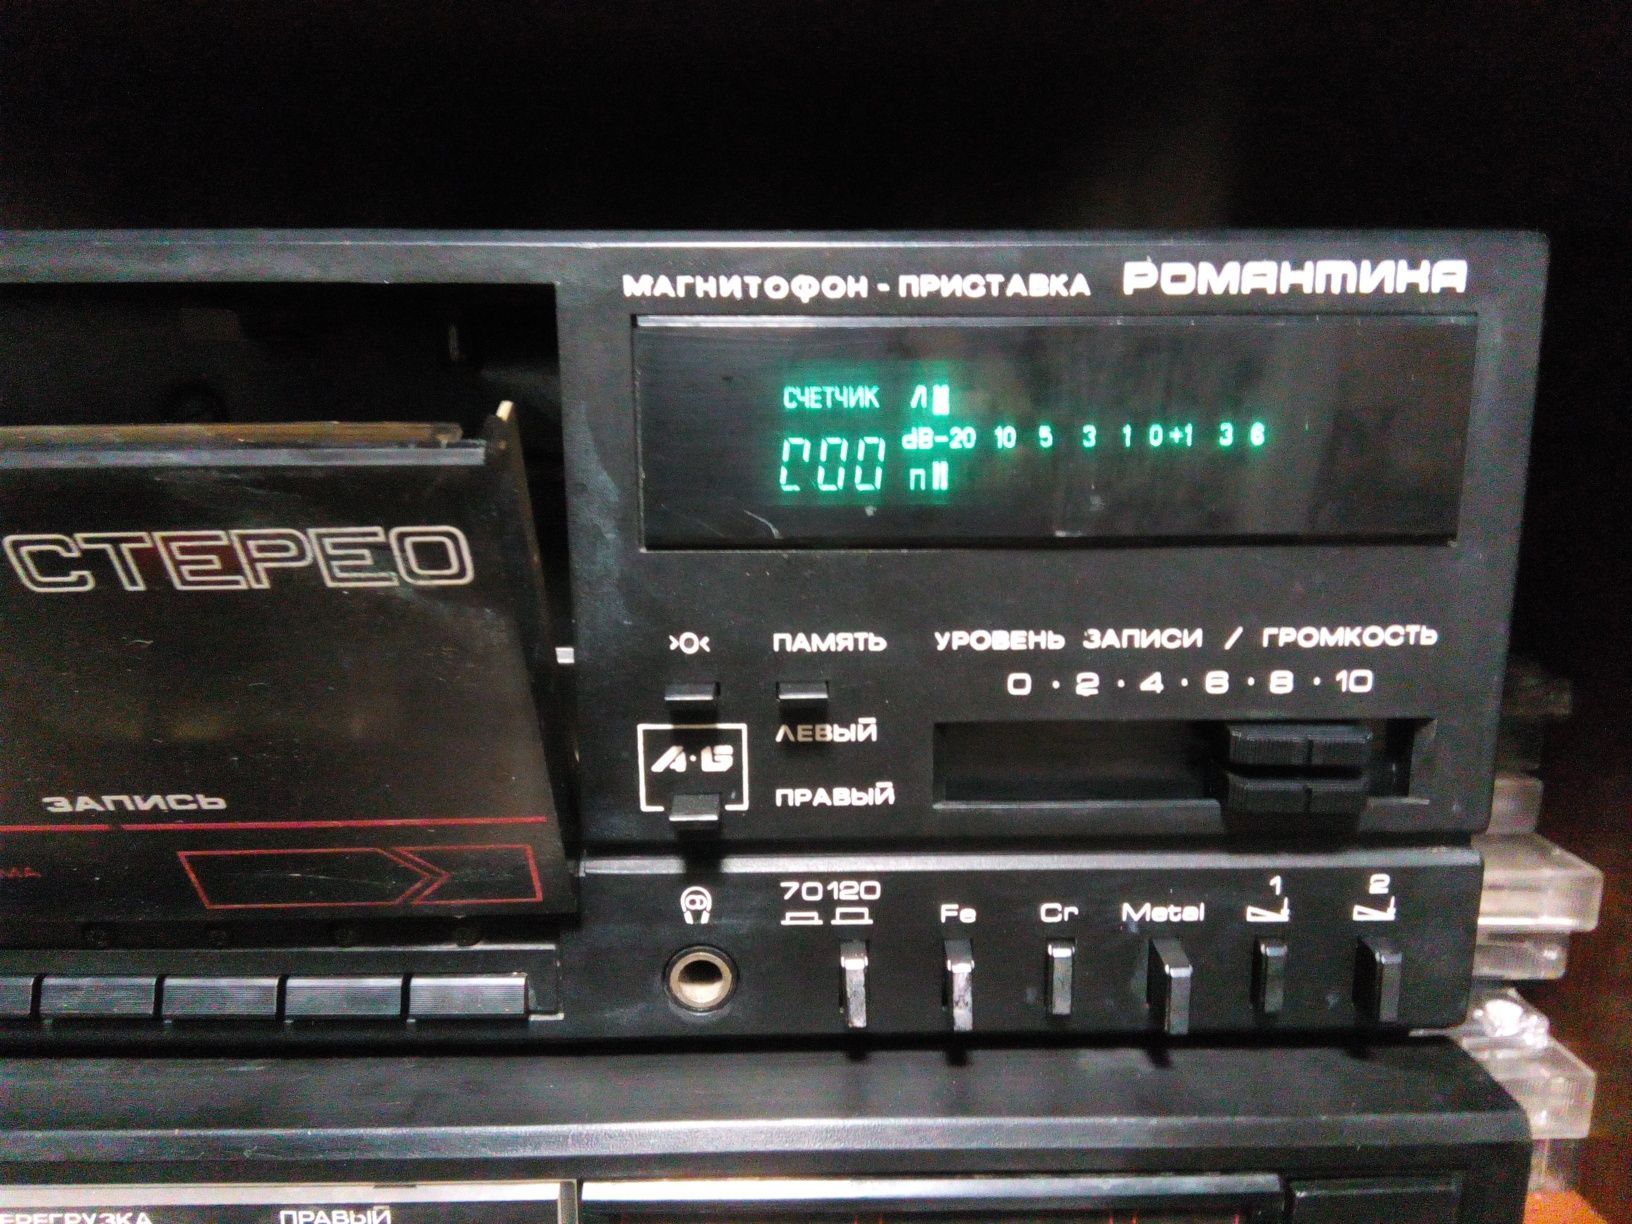 Романтика МП225С магнитофон кассетный